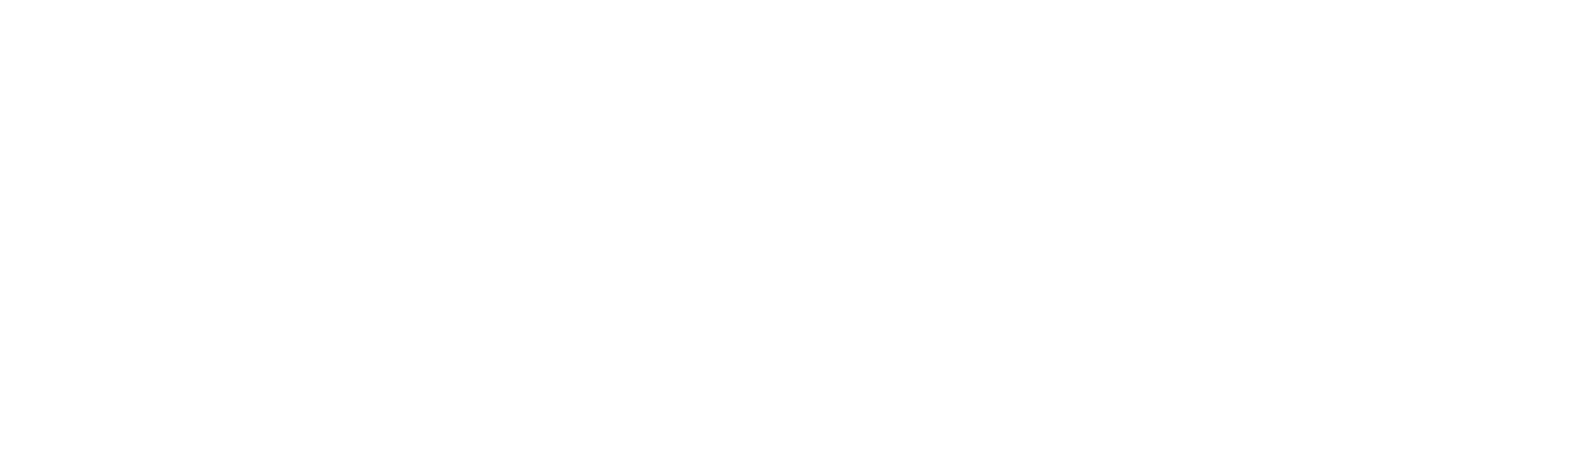 USD Partners
 logo large for dark backgrounds (transparent PNG)